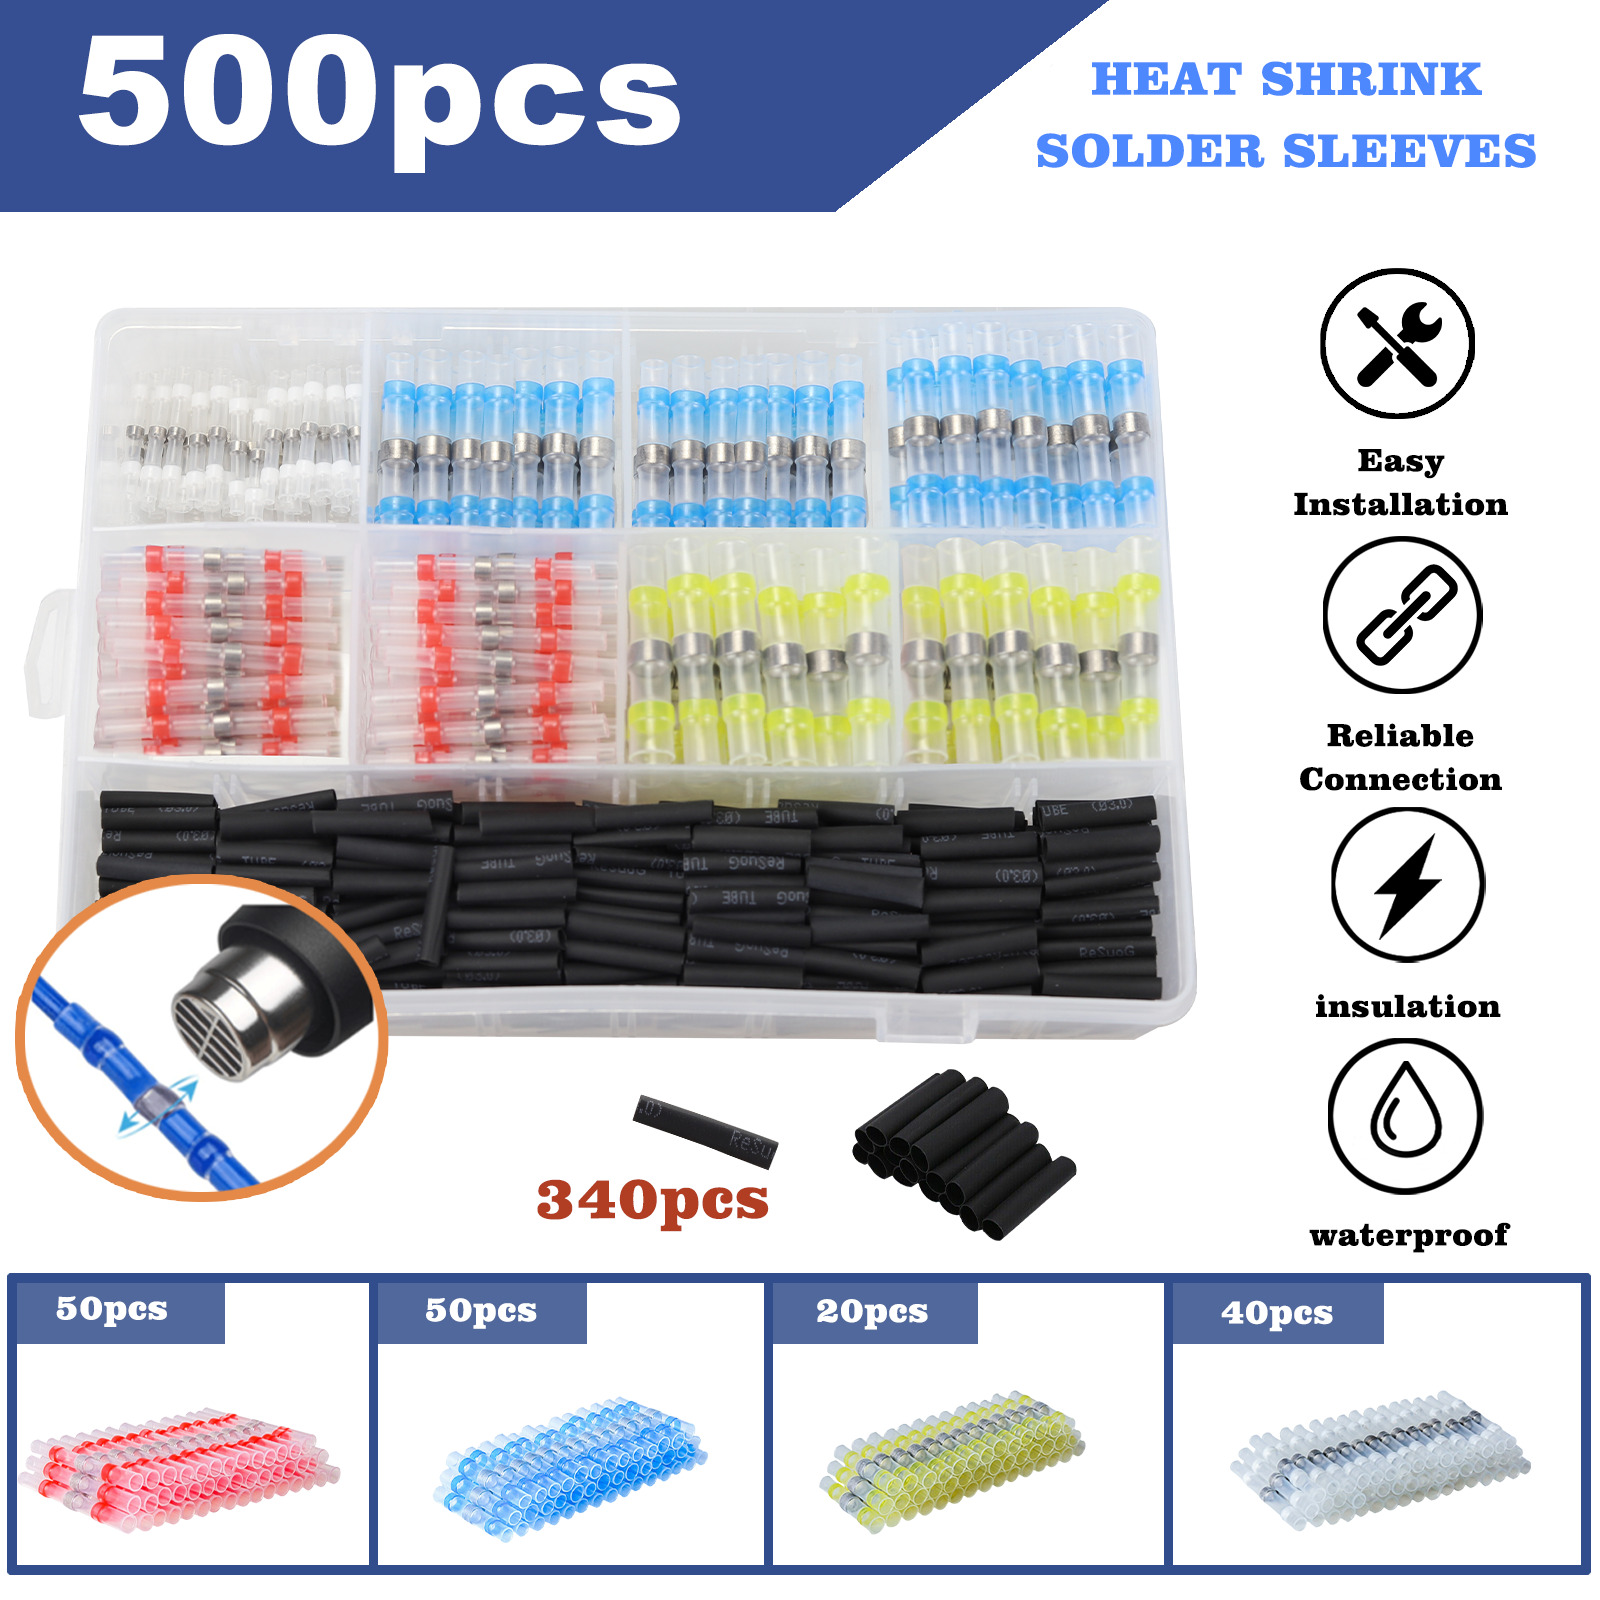 Waterproof 500PCS Solder Sleeve Seal Heat Shrink Butt Wire Connectors Terminals